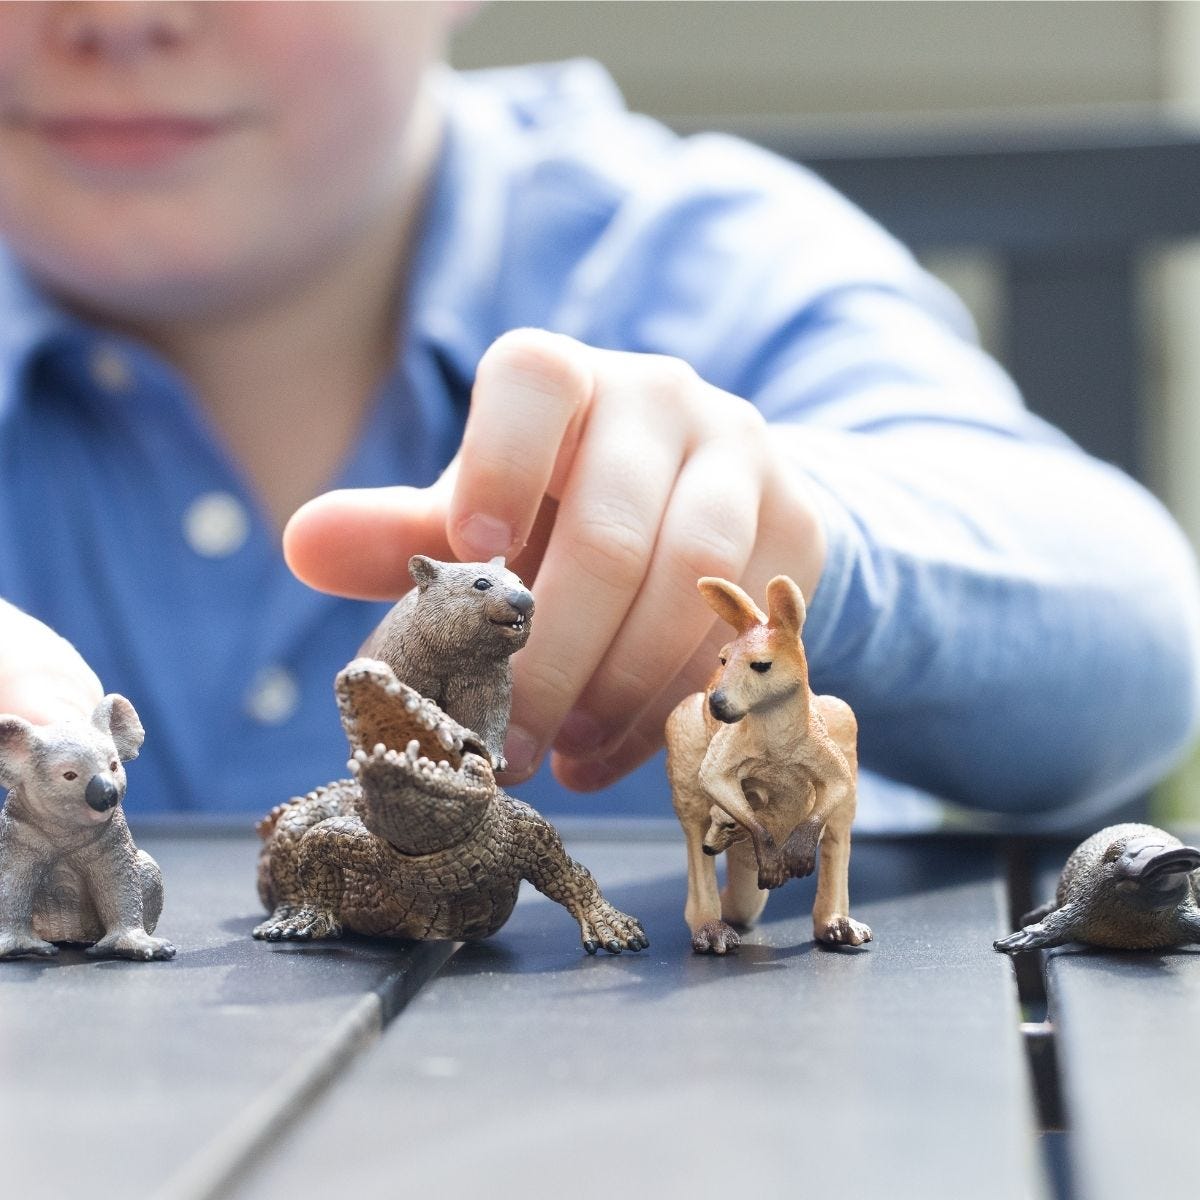 18 Pcs Safari Animal Toys, Realistic North American & Australian Animal  Figures, Educational Wild Animal Figurines for Kids 3 4 5 6 7 Years Old